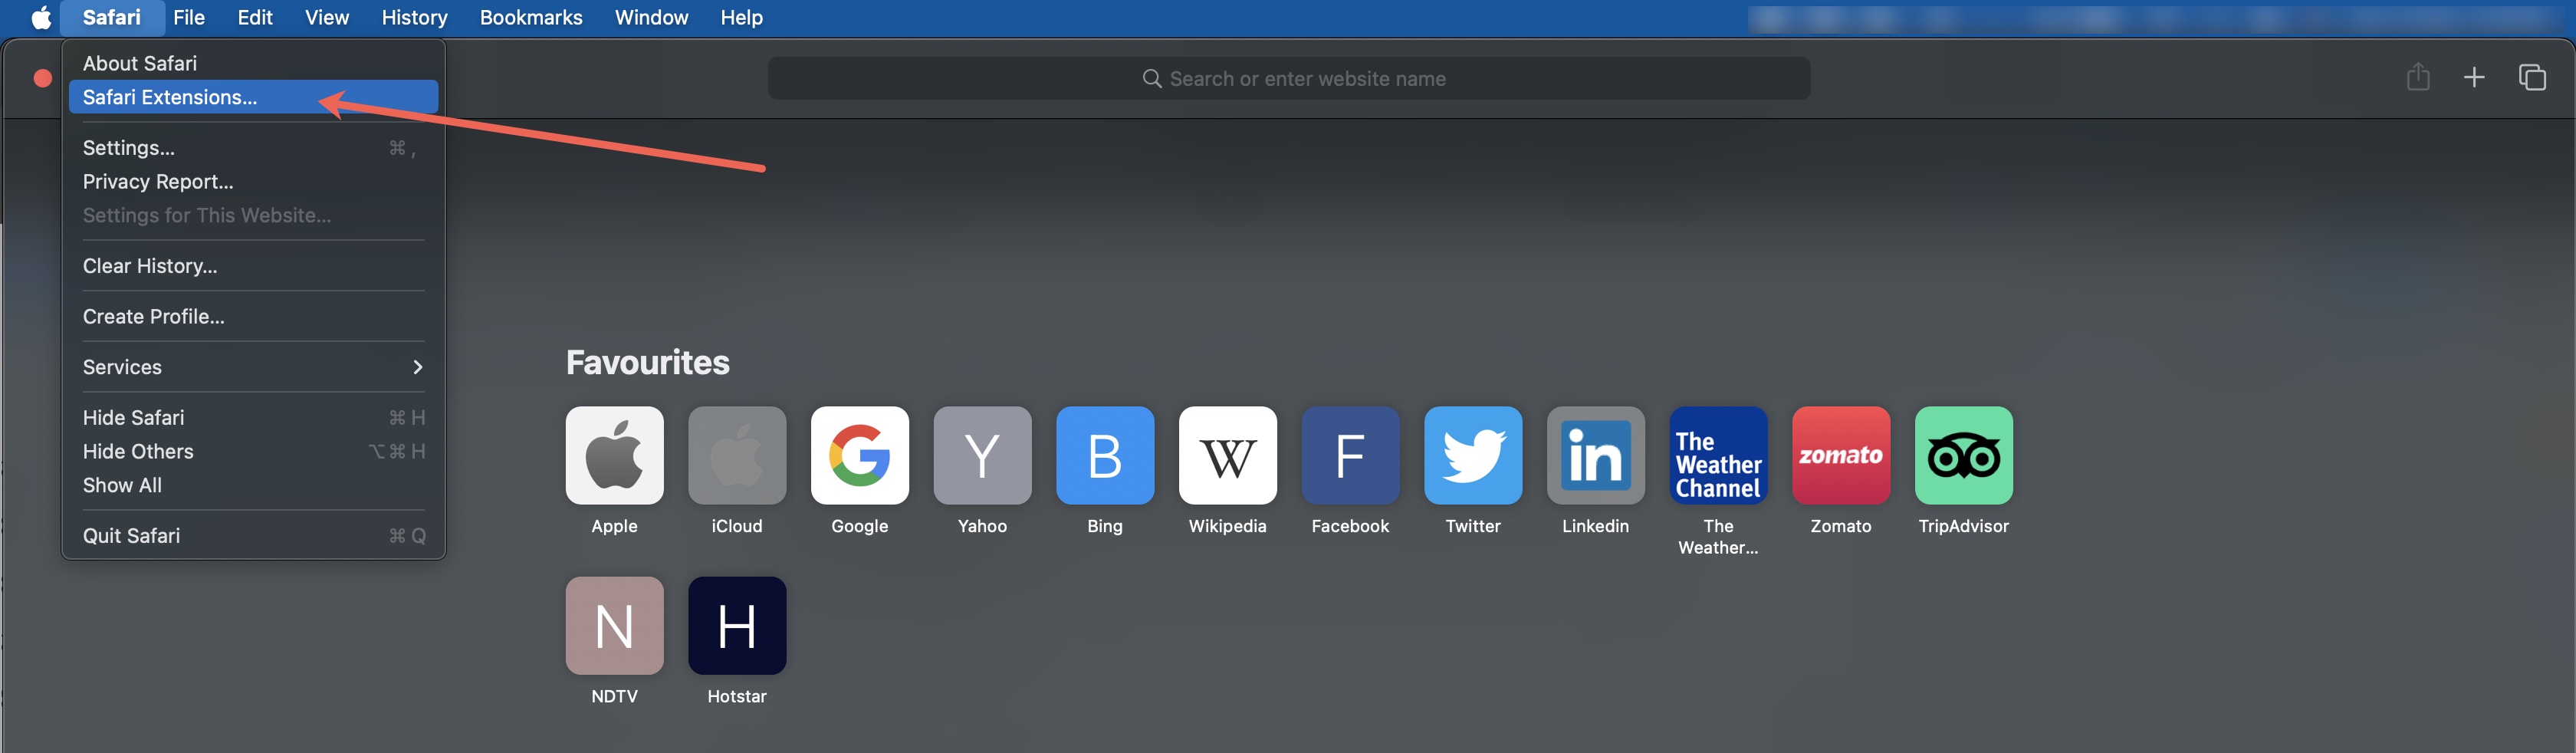 Figure 1: Safari Browser Dashboard Screen